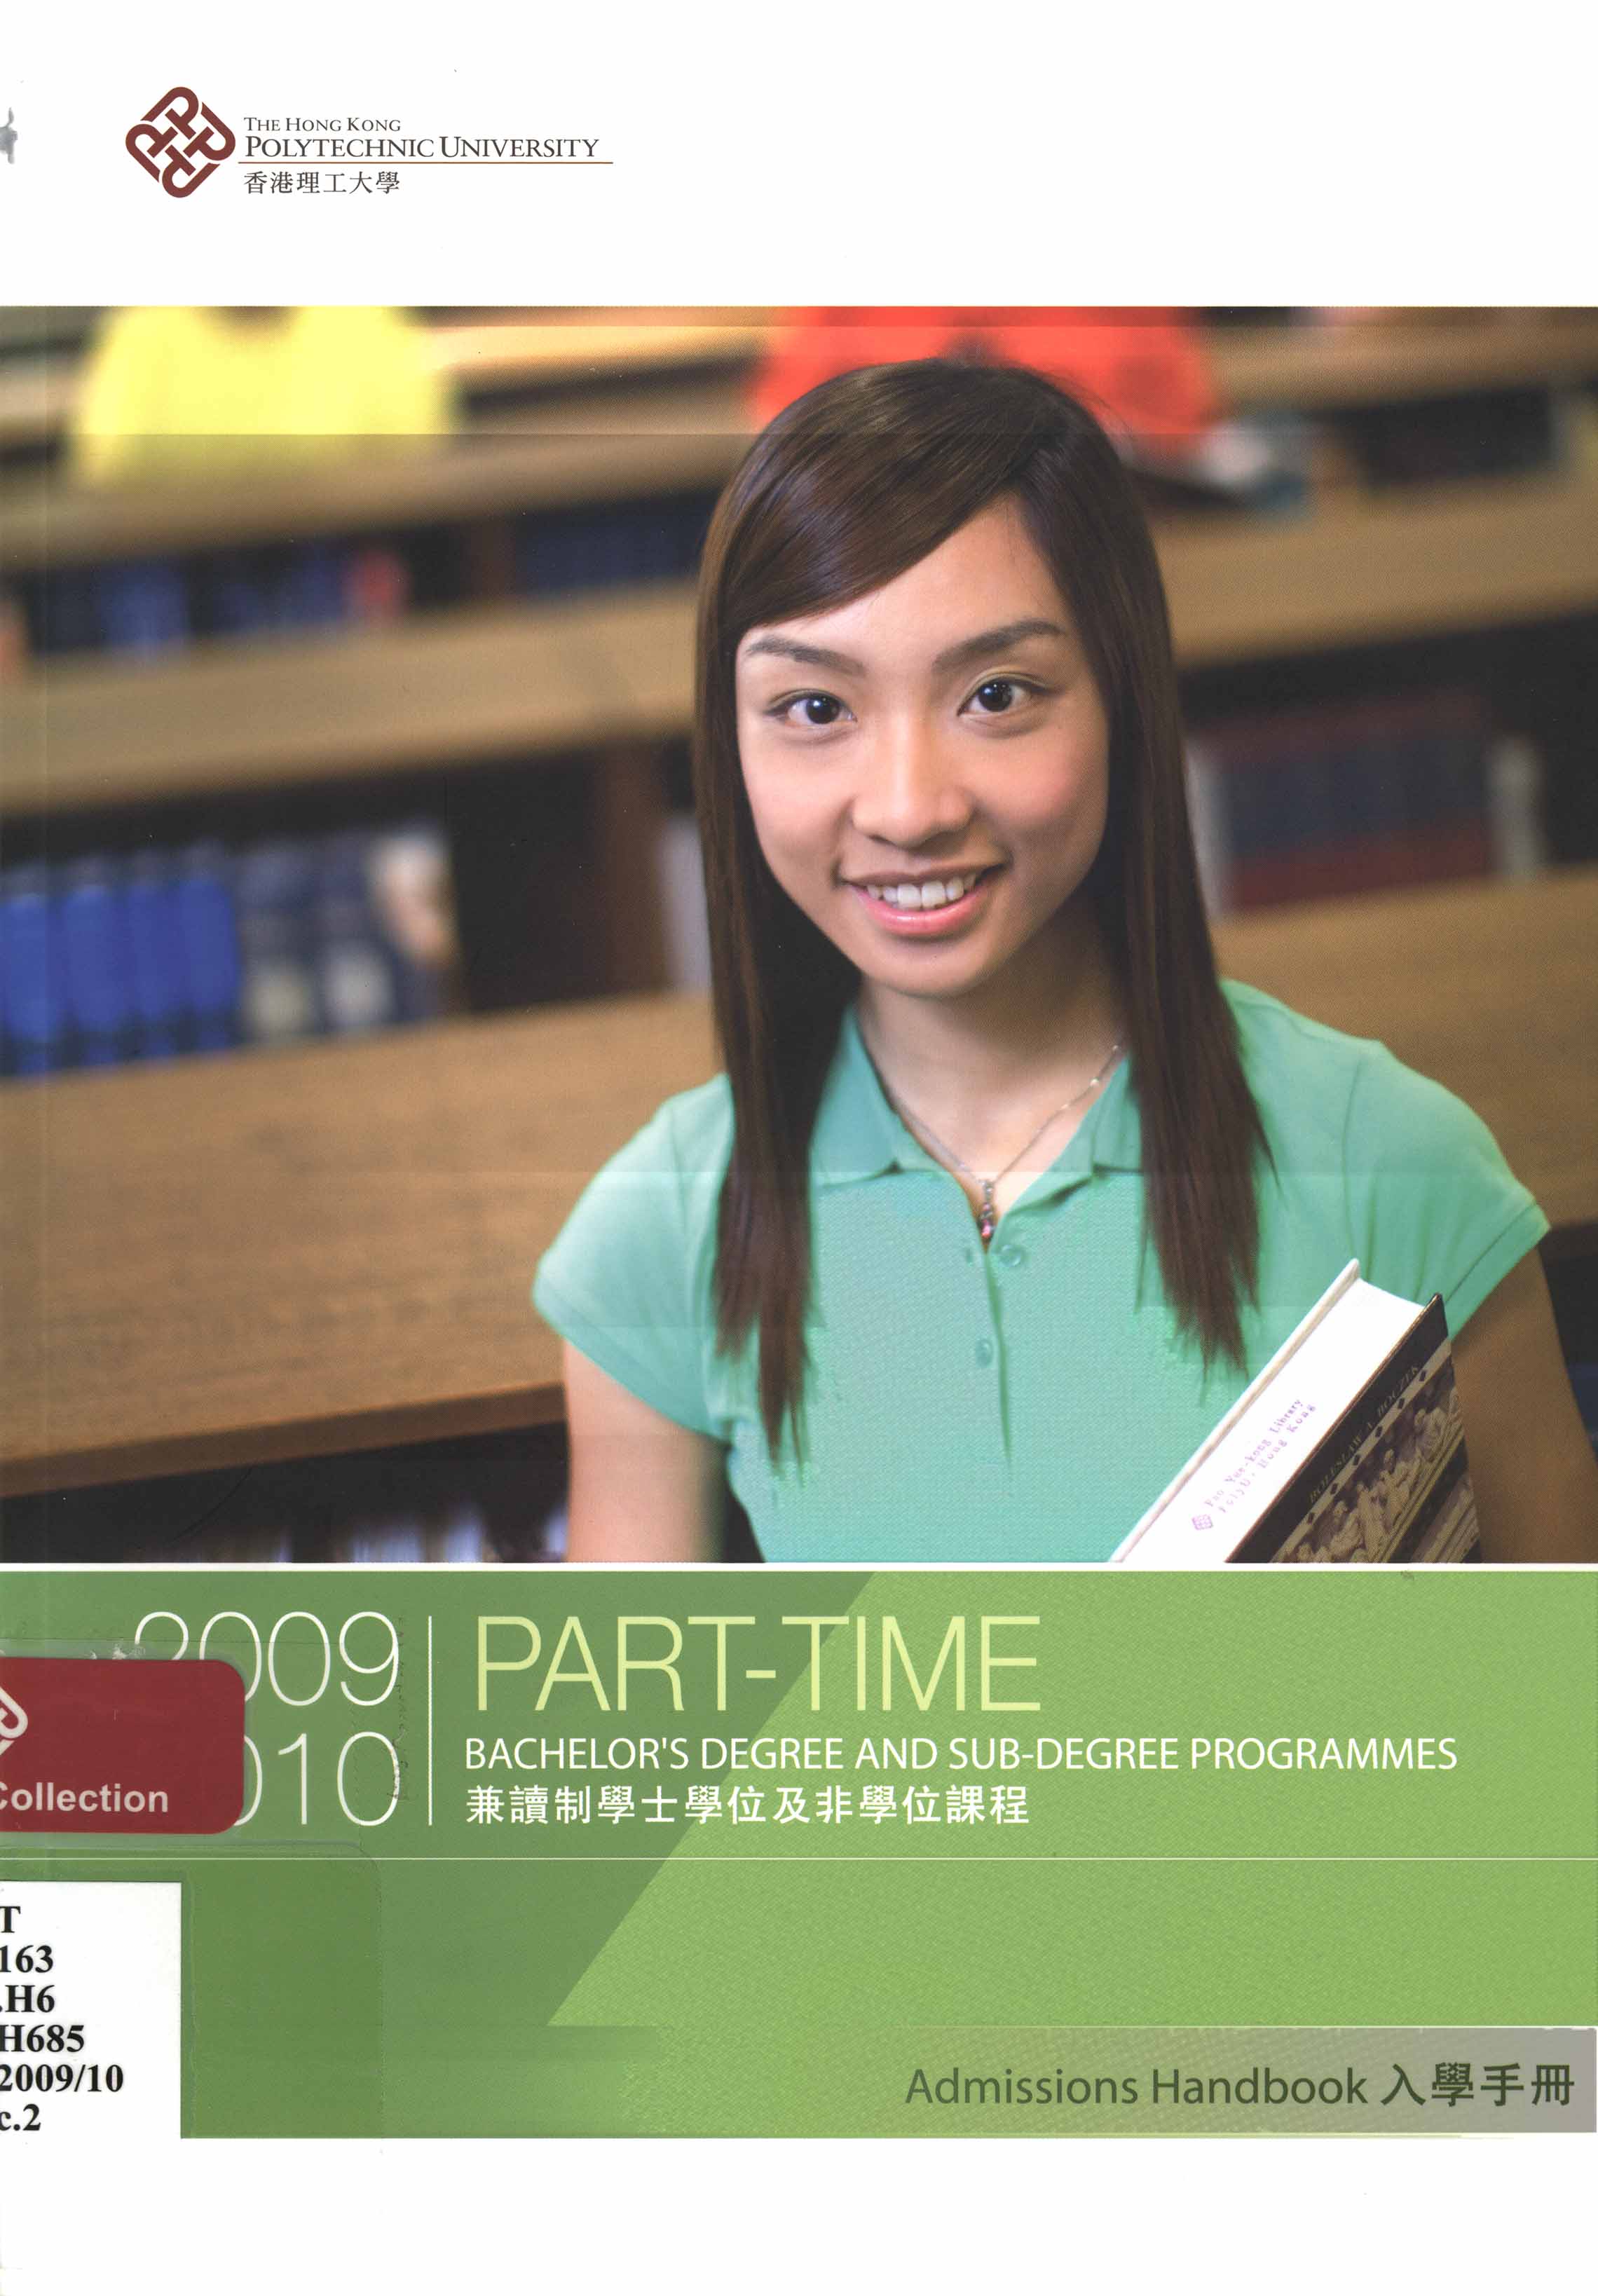 Hong Kong Polytechnic University. Prospectus. Part-time bachelor's degree and sub-degree programmes 2009/10